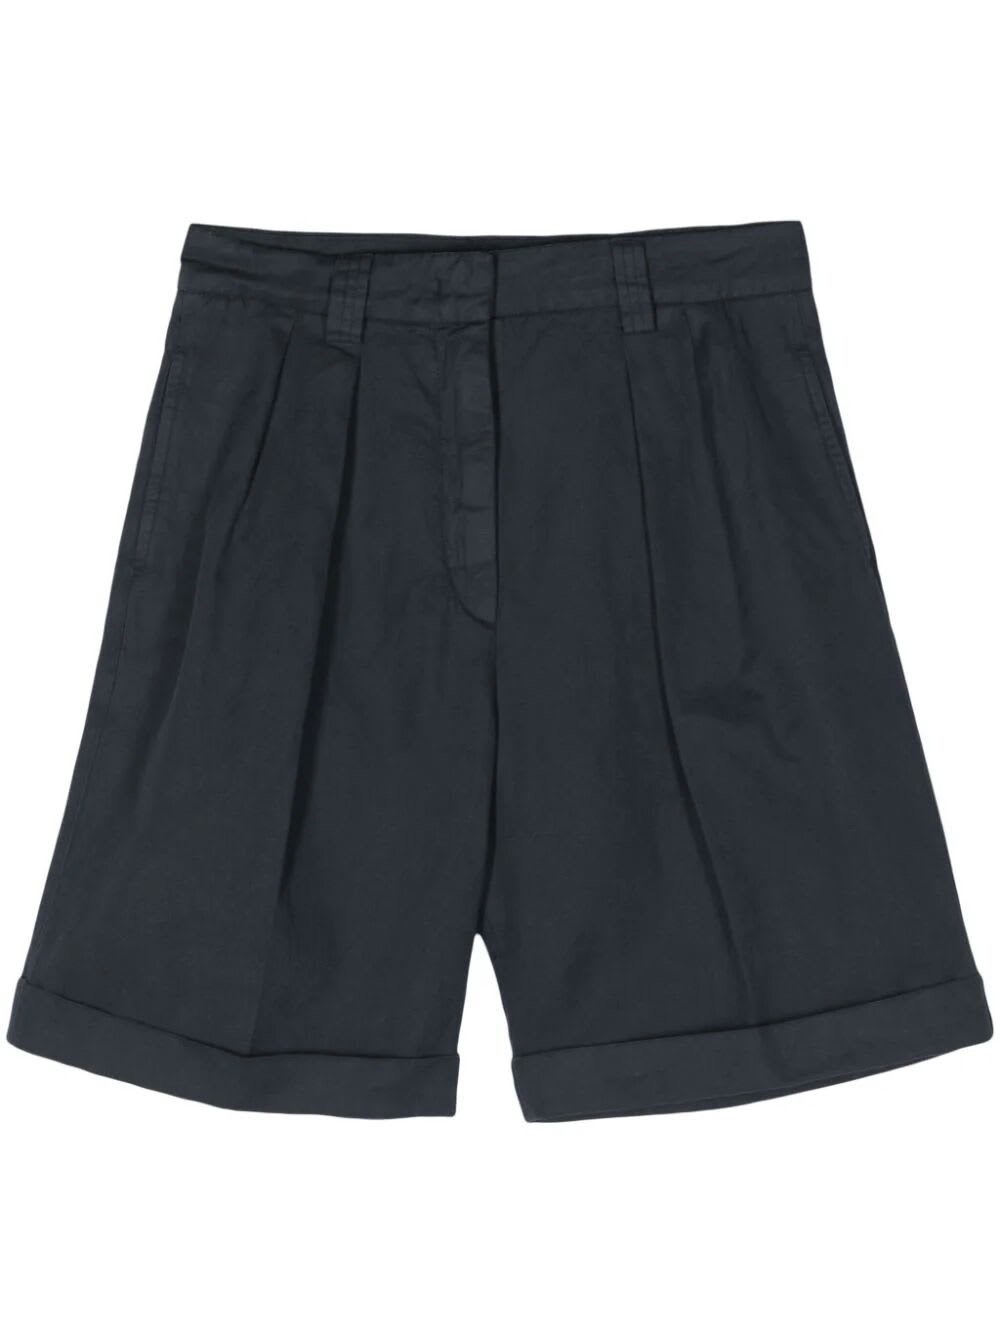 Mod 0210 Shorts